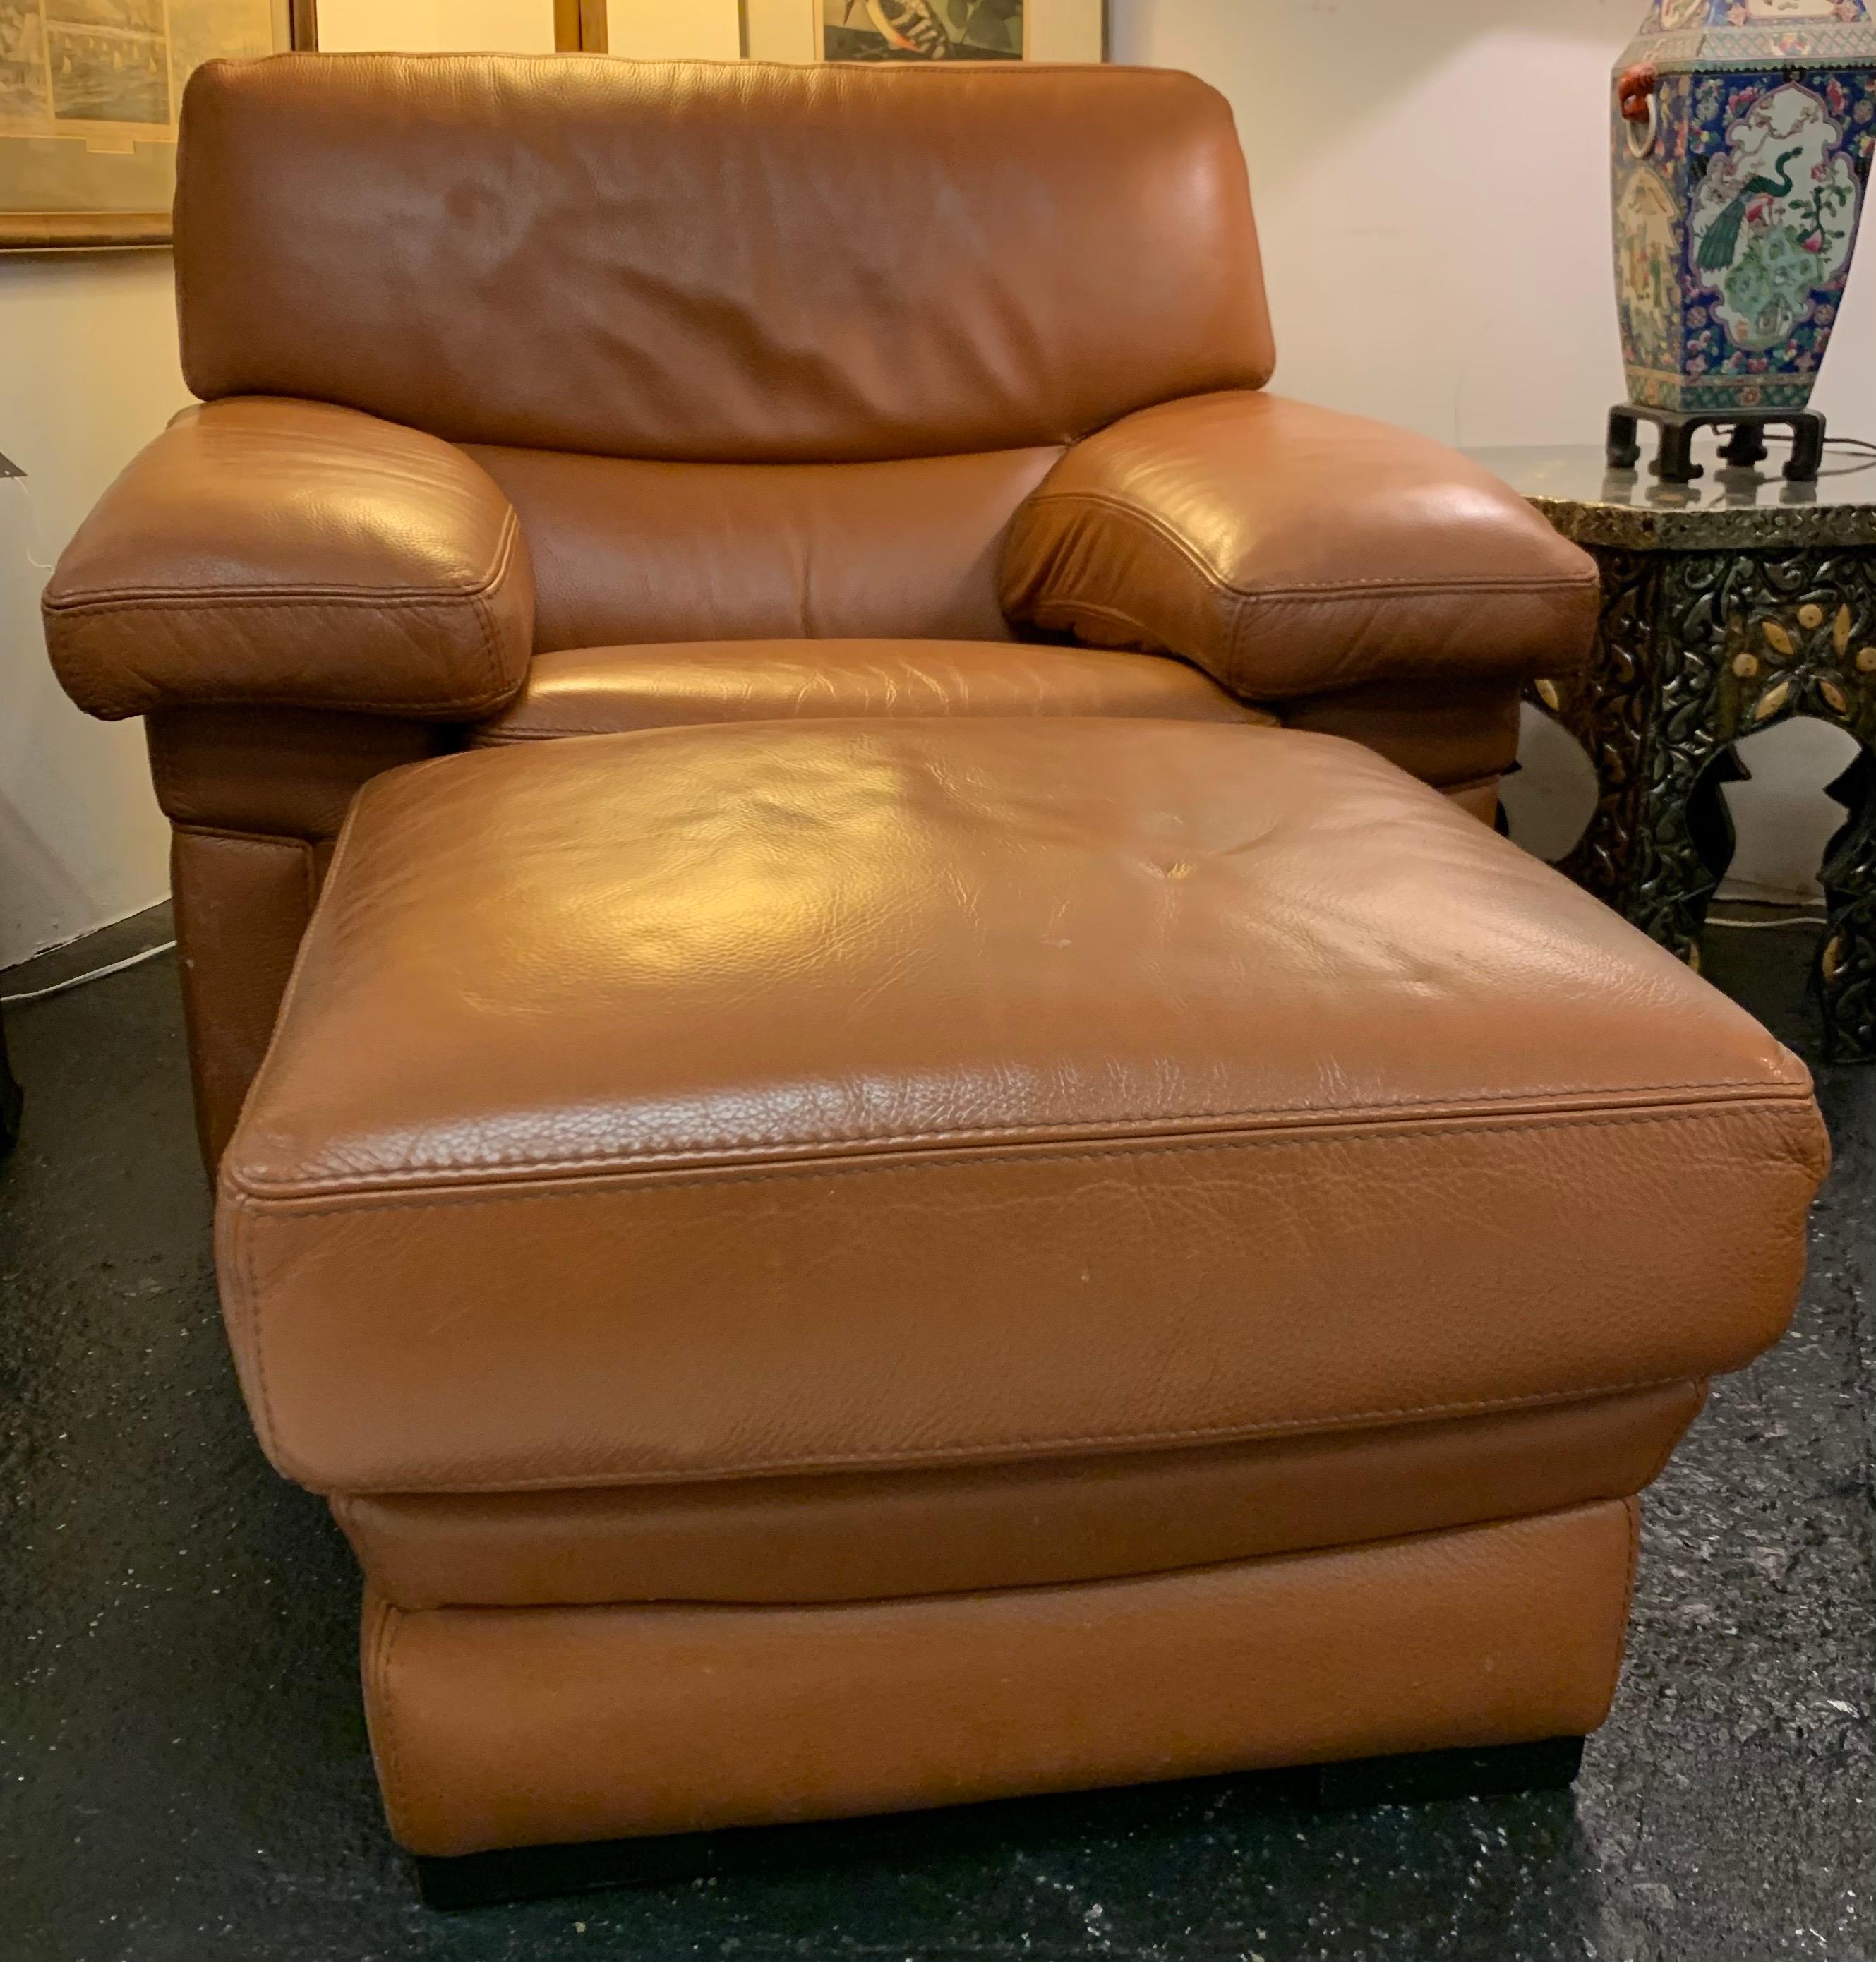 decoro leather chair